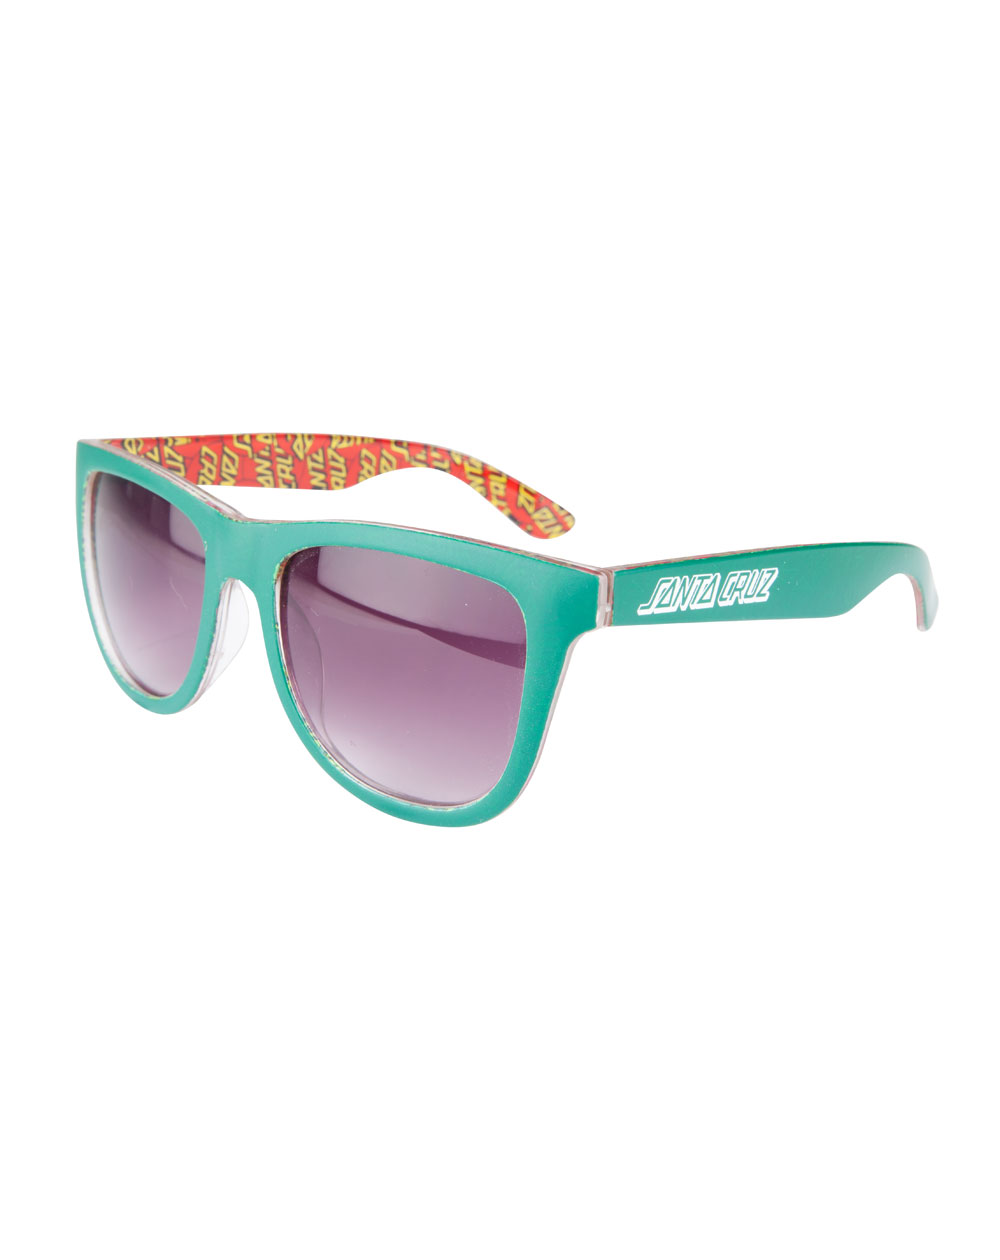 Santa Cruz Men's Sunglasses Multi Classic Dot Evergreen